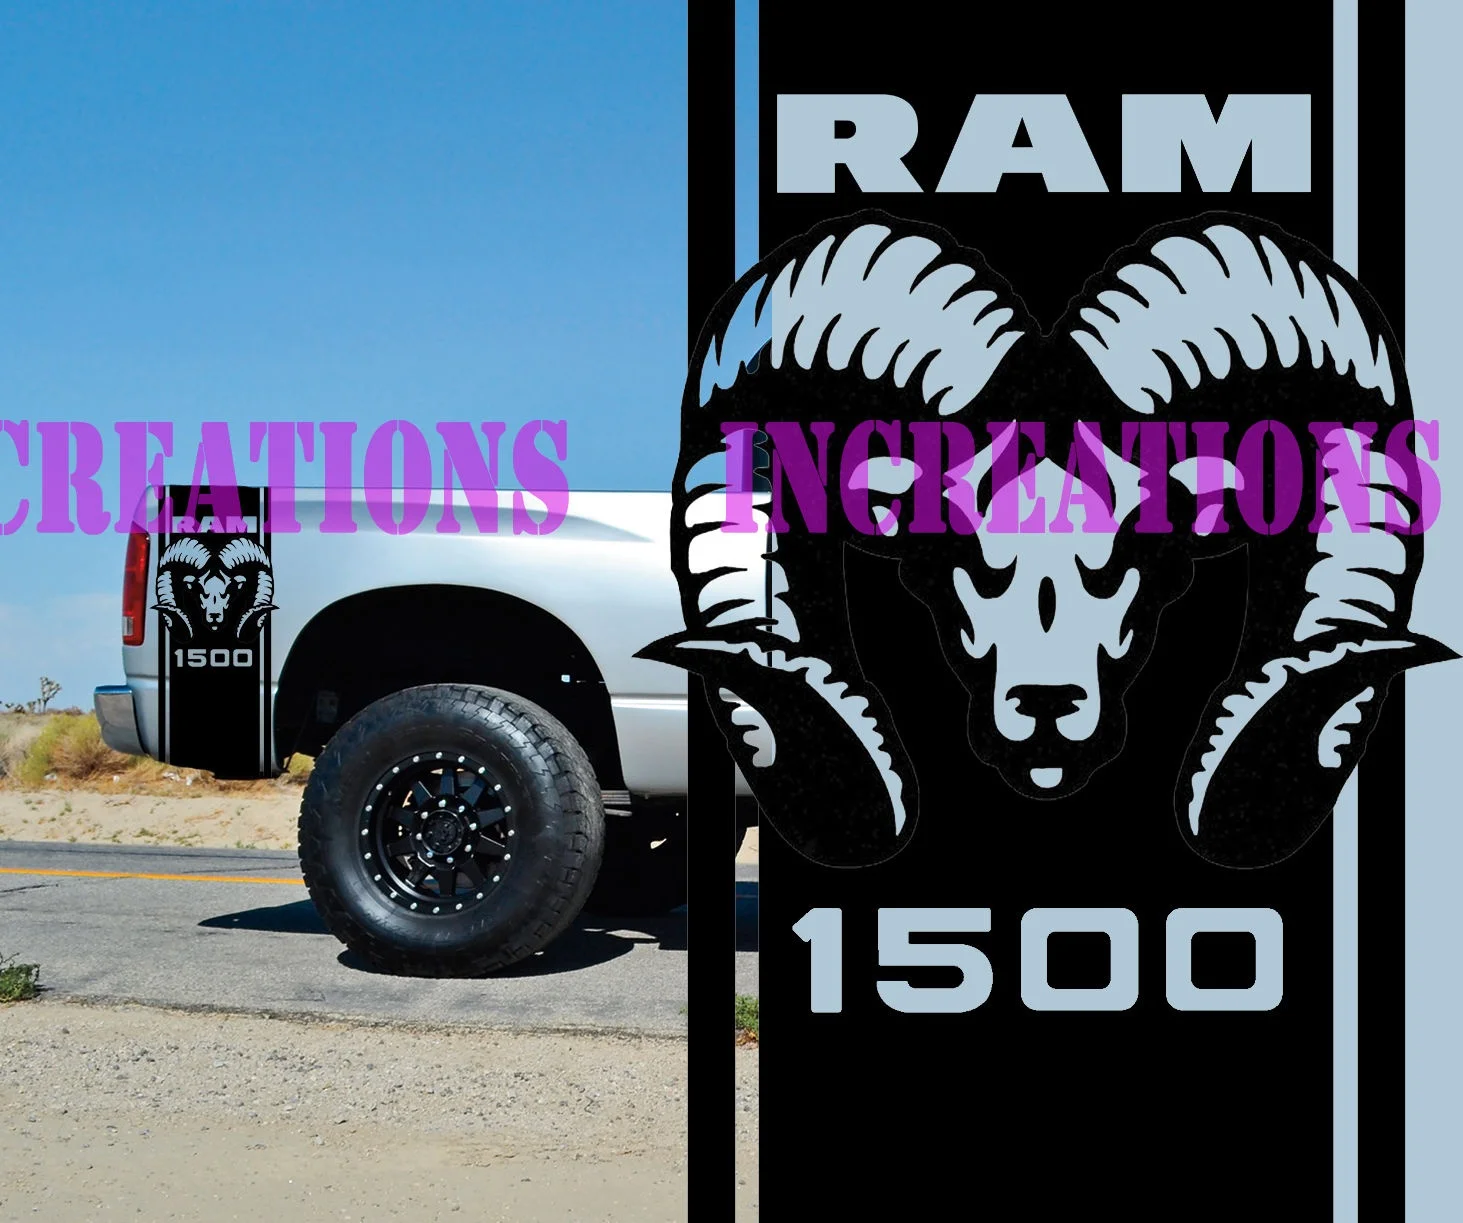 

For Universal 1Set/2Pcs Hemi Dodge Ram 1500 Bed Stripes Truck Decals Mopar Stickers Set of 2 Racing